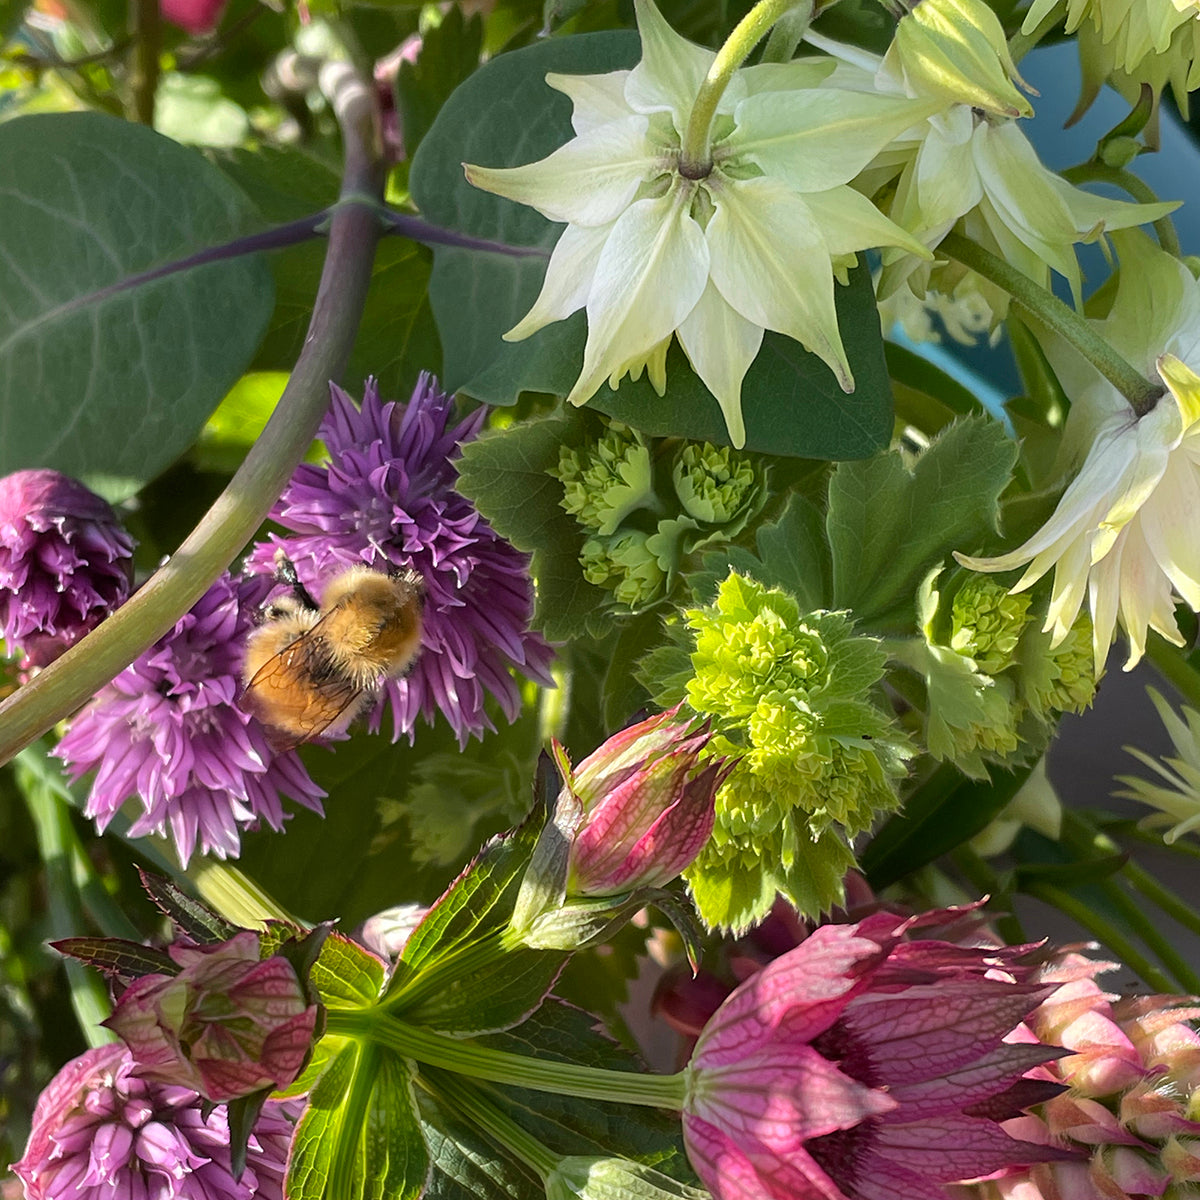 A bee on flowers from Applecross croft grown on the Applecross Peninsula.